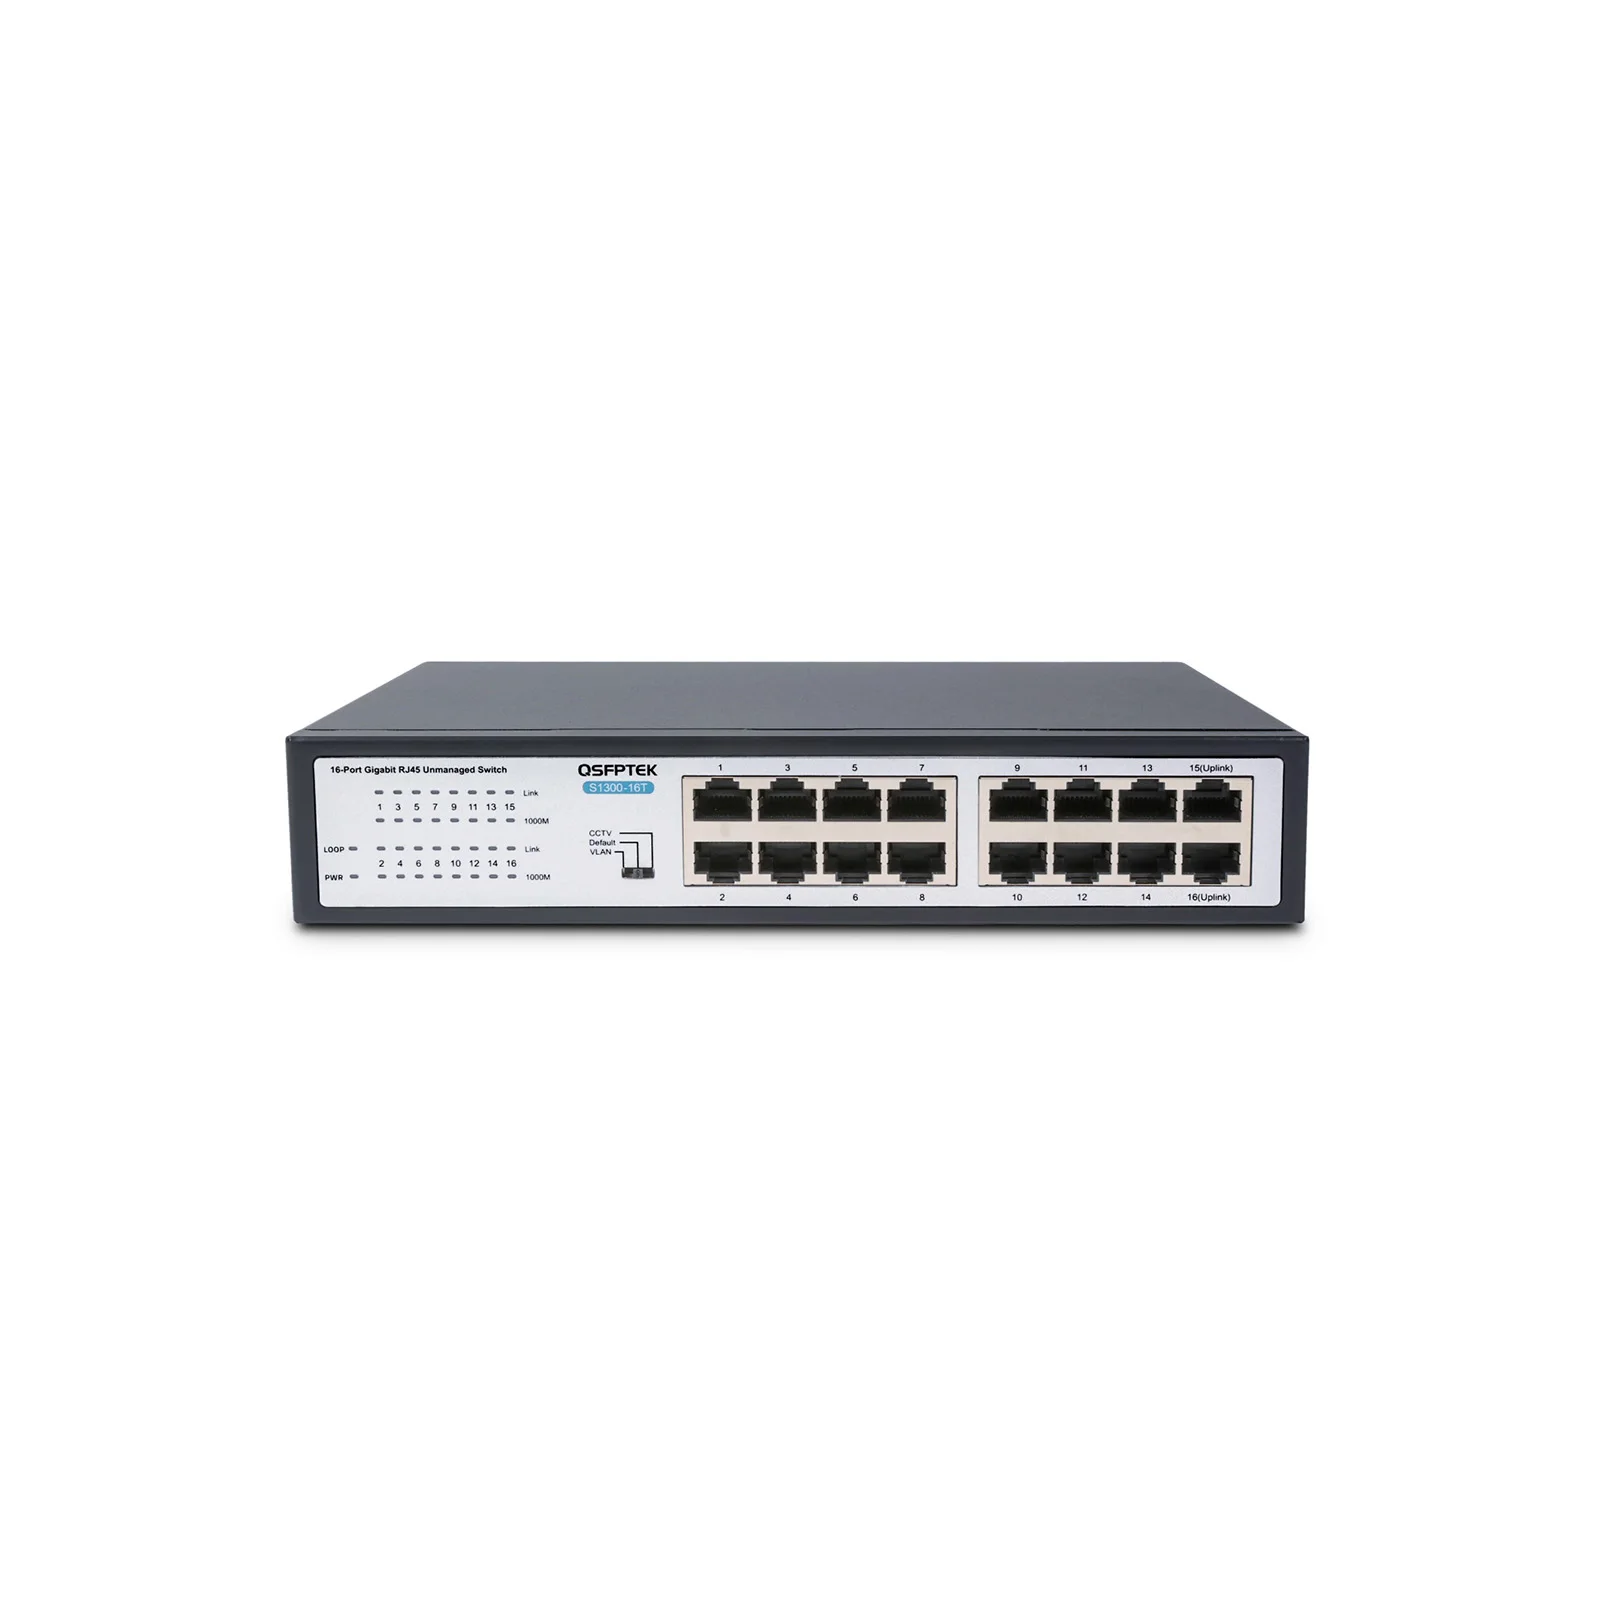 48-Port 10G Ethernet L3 Stackable Fiber Switch with 2x 40G QSFP+ Ports and  100G Uplinks, S7300-48X2Q4C - QSFPTEK